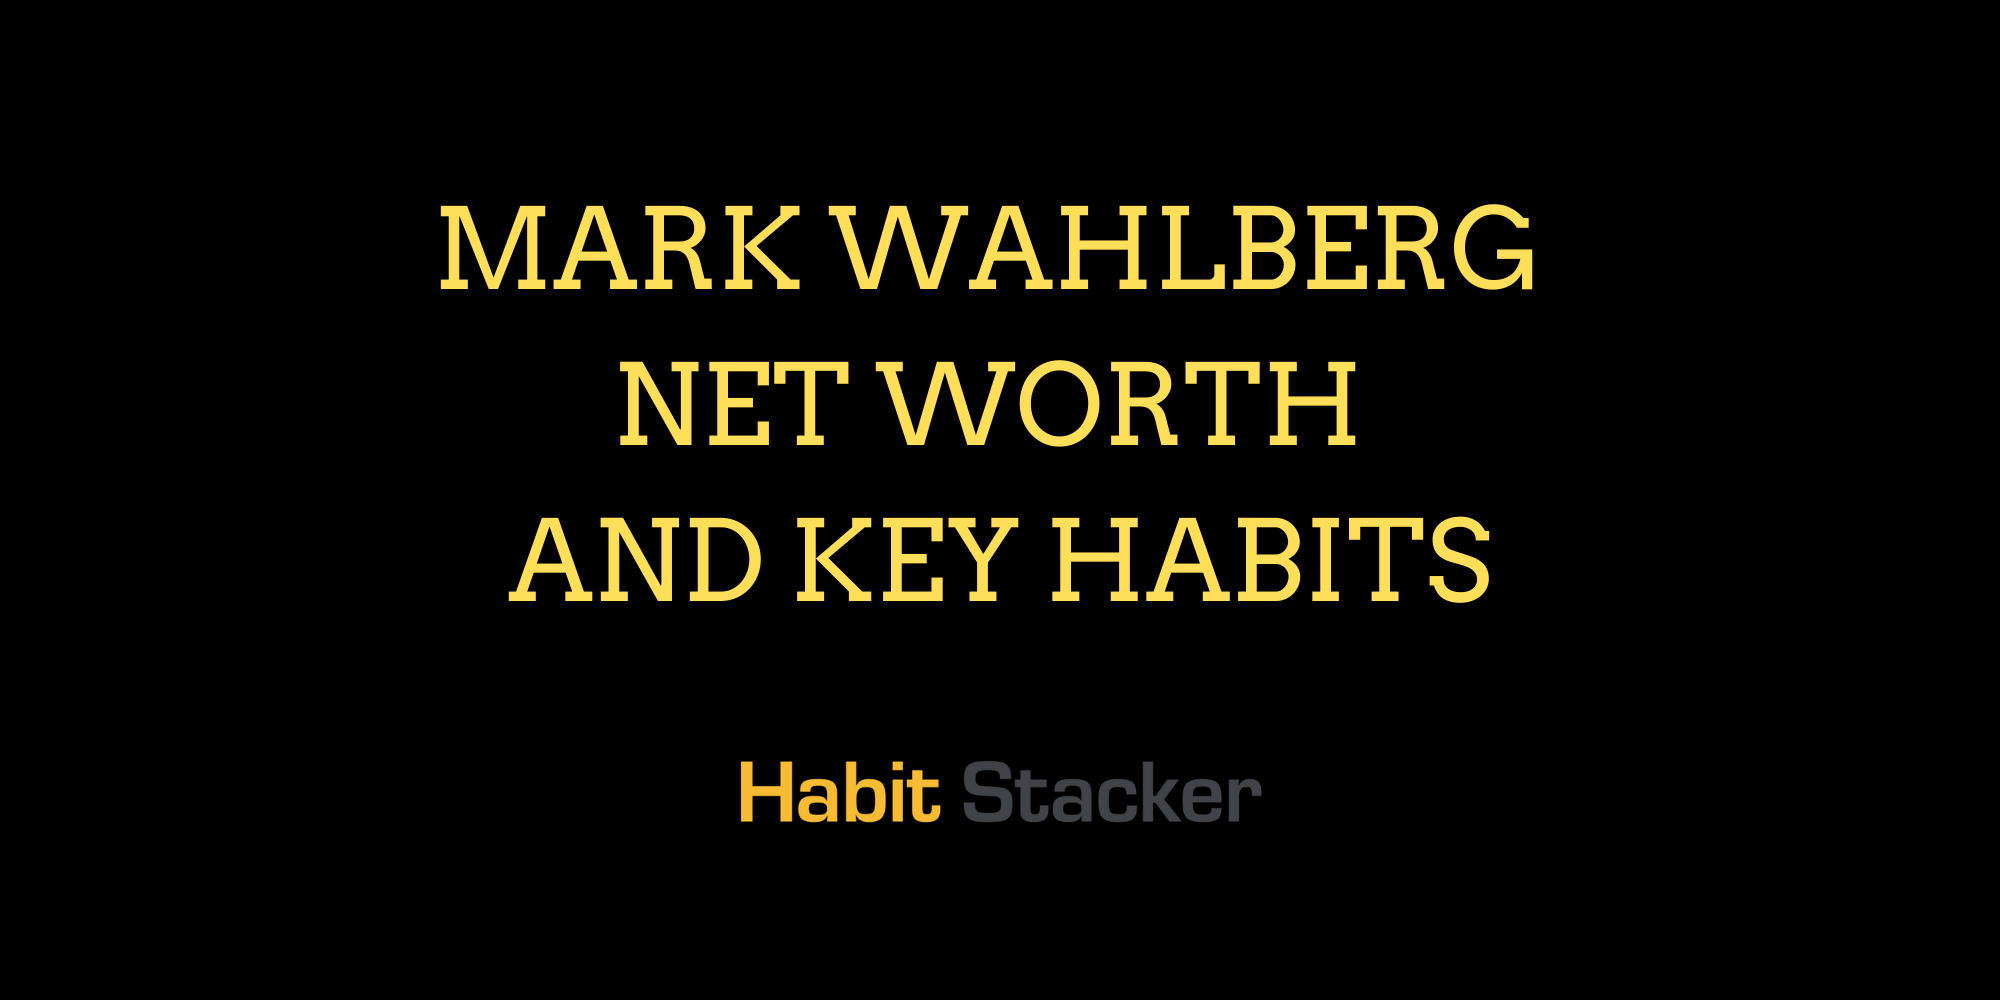 Mark Wahlberg Net Worth and Key Habits